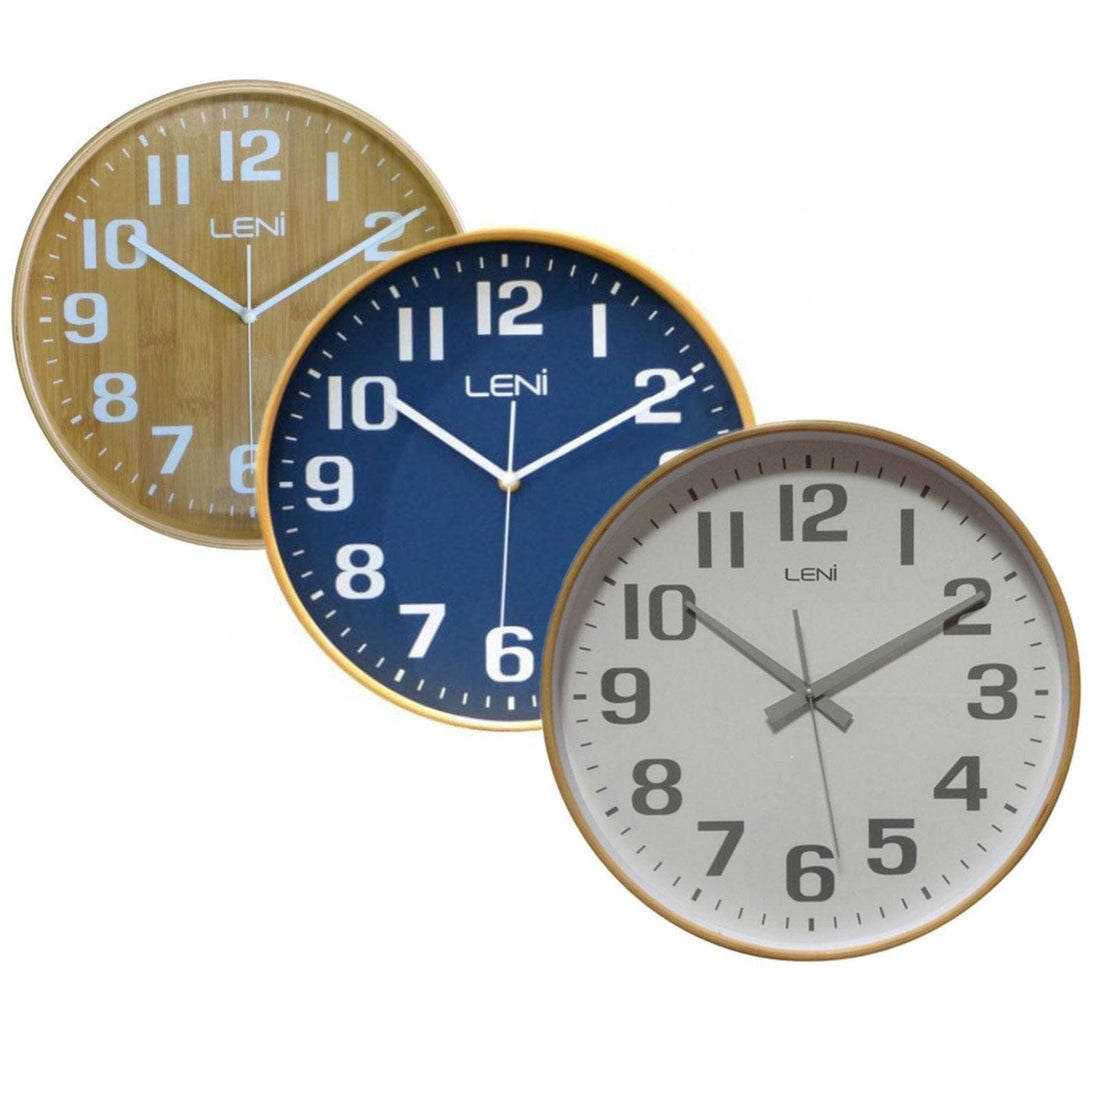 28cm Leni Wood Wall Clock - 3 Colours Available.